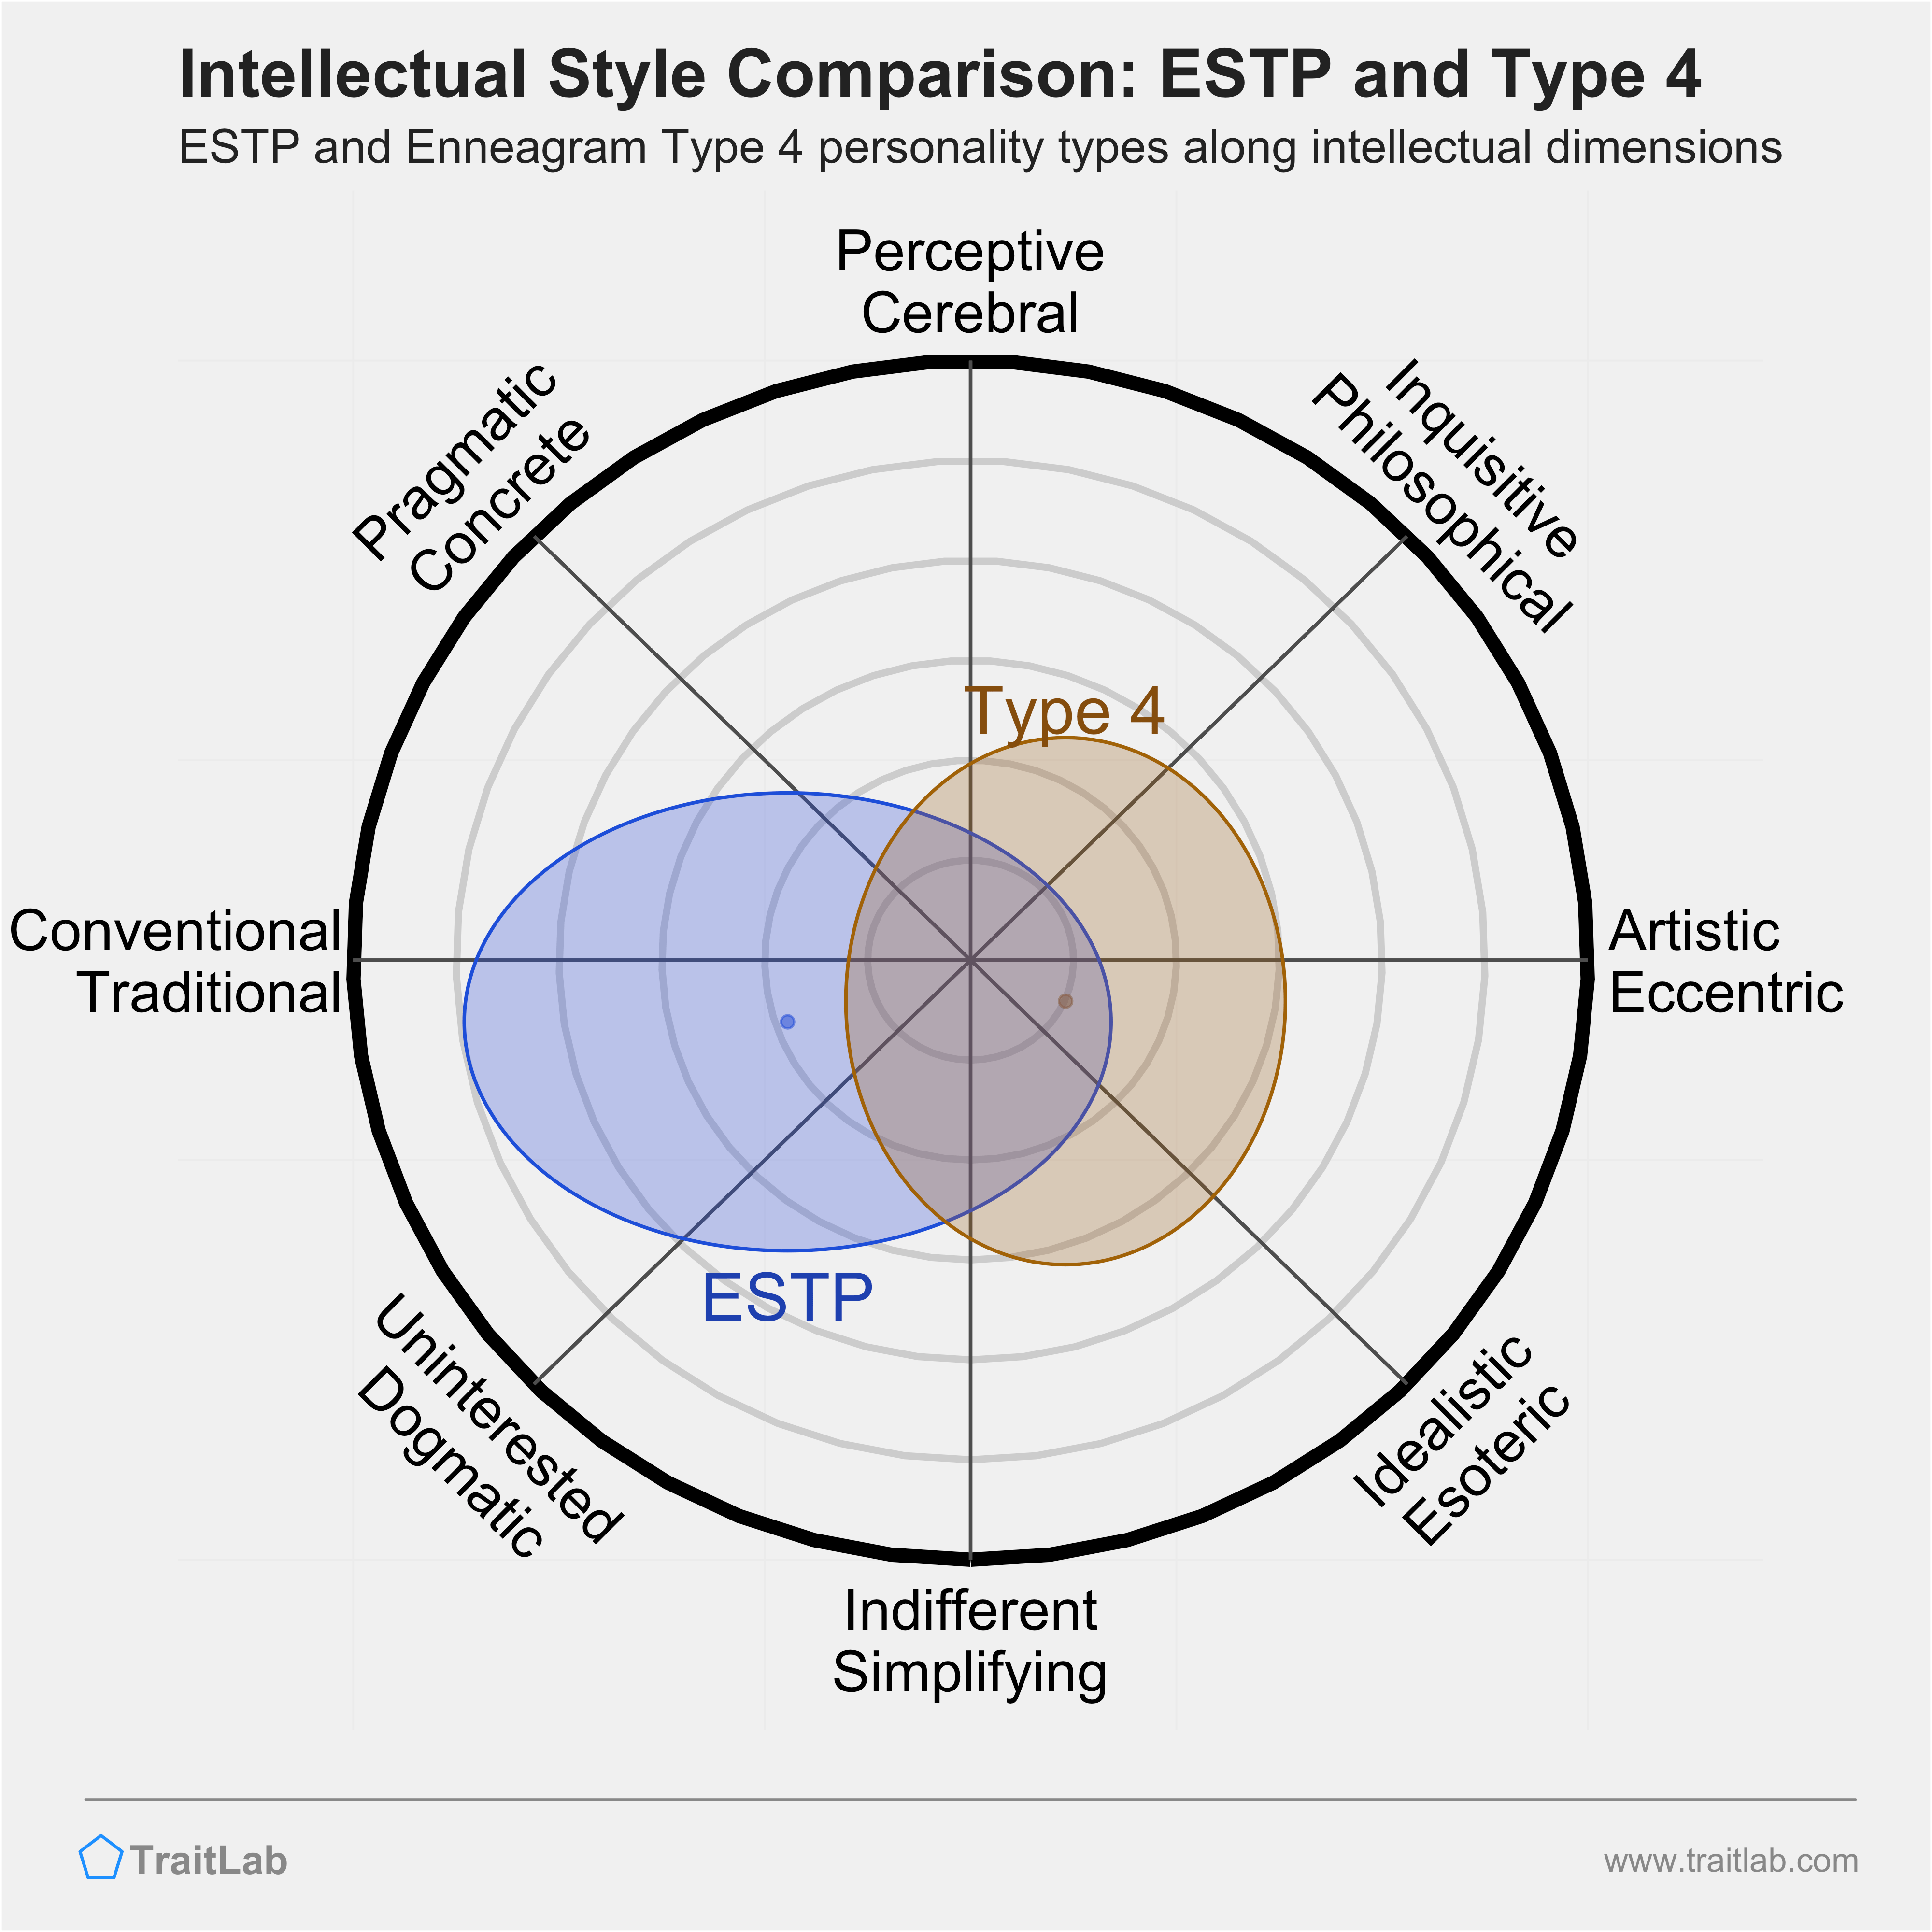 ESTP and Type 4 comparison across intellectual dimensions